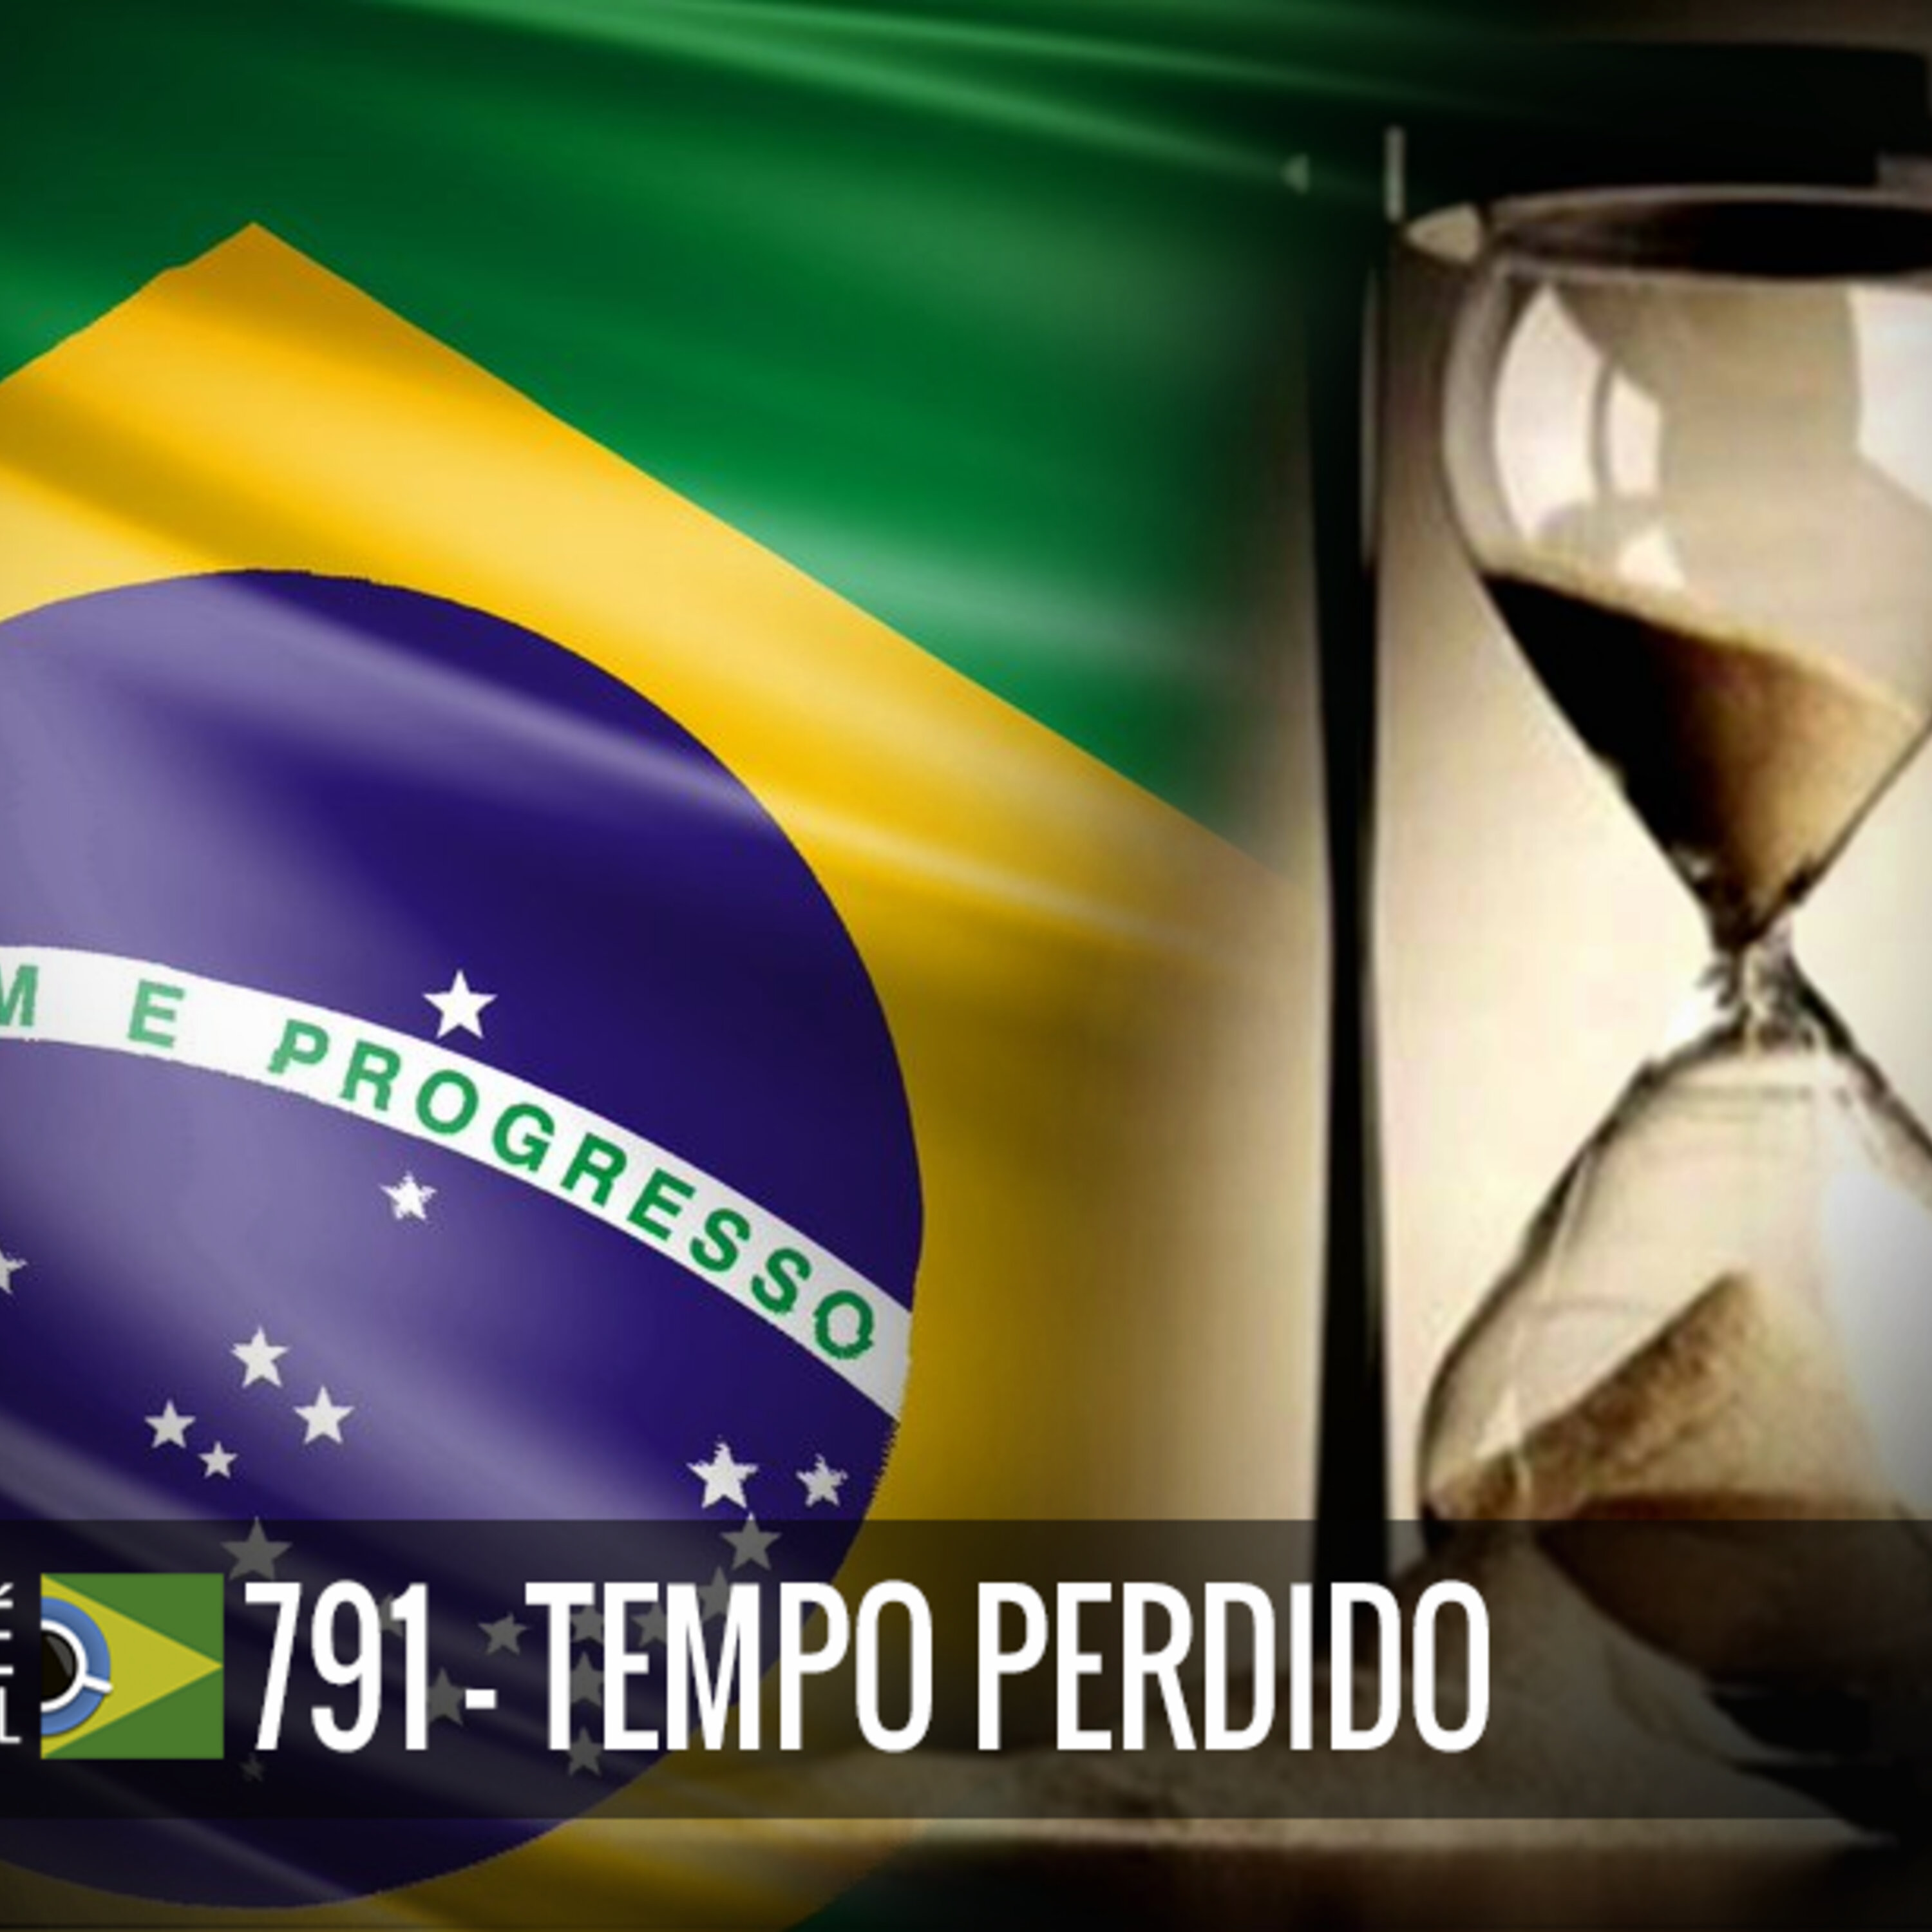 Cafe Brasil 791 - Tempo Perdido